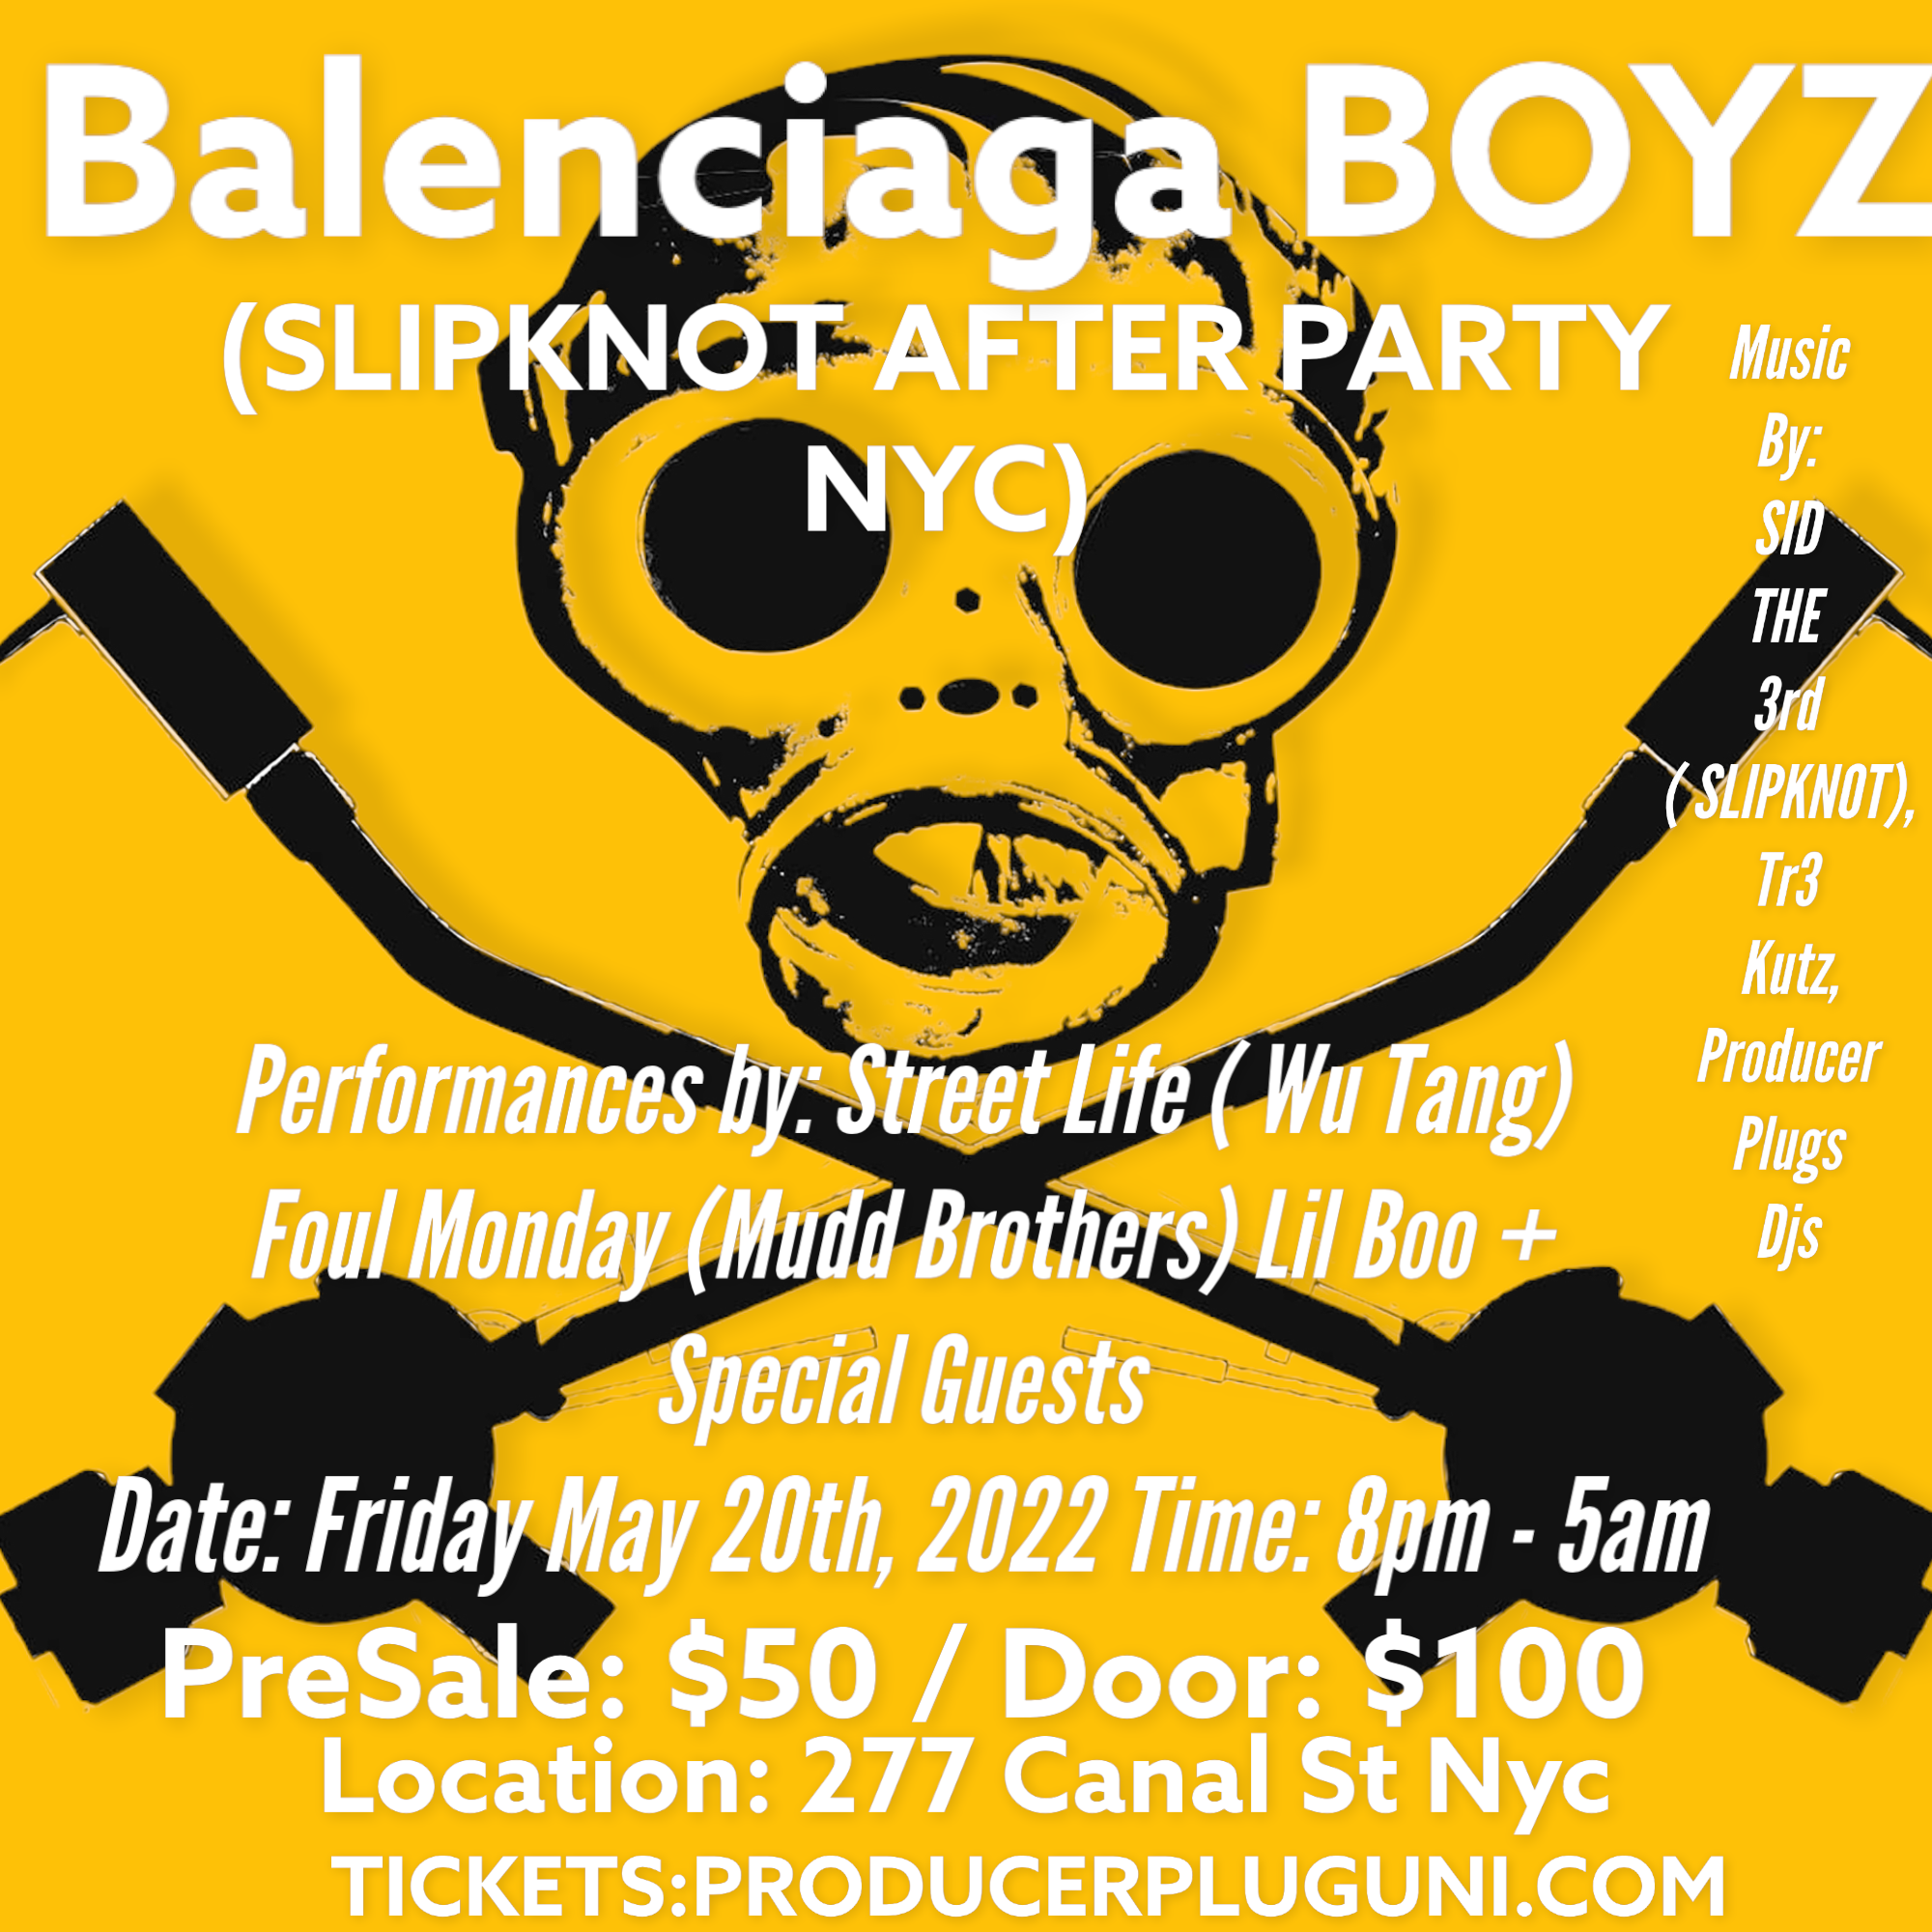 Balenciaga ( AFTER NYC) Friday May 20th, 2022 – Producerpluguni